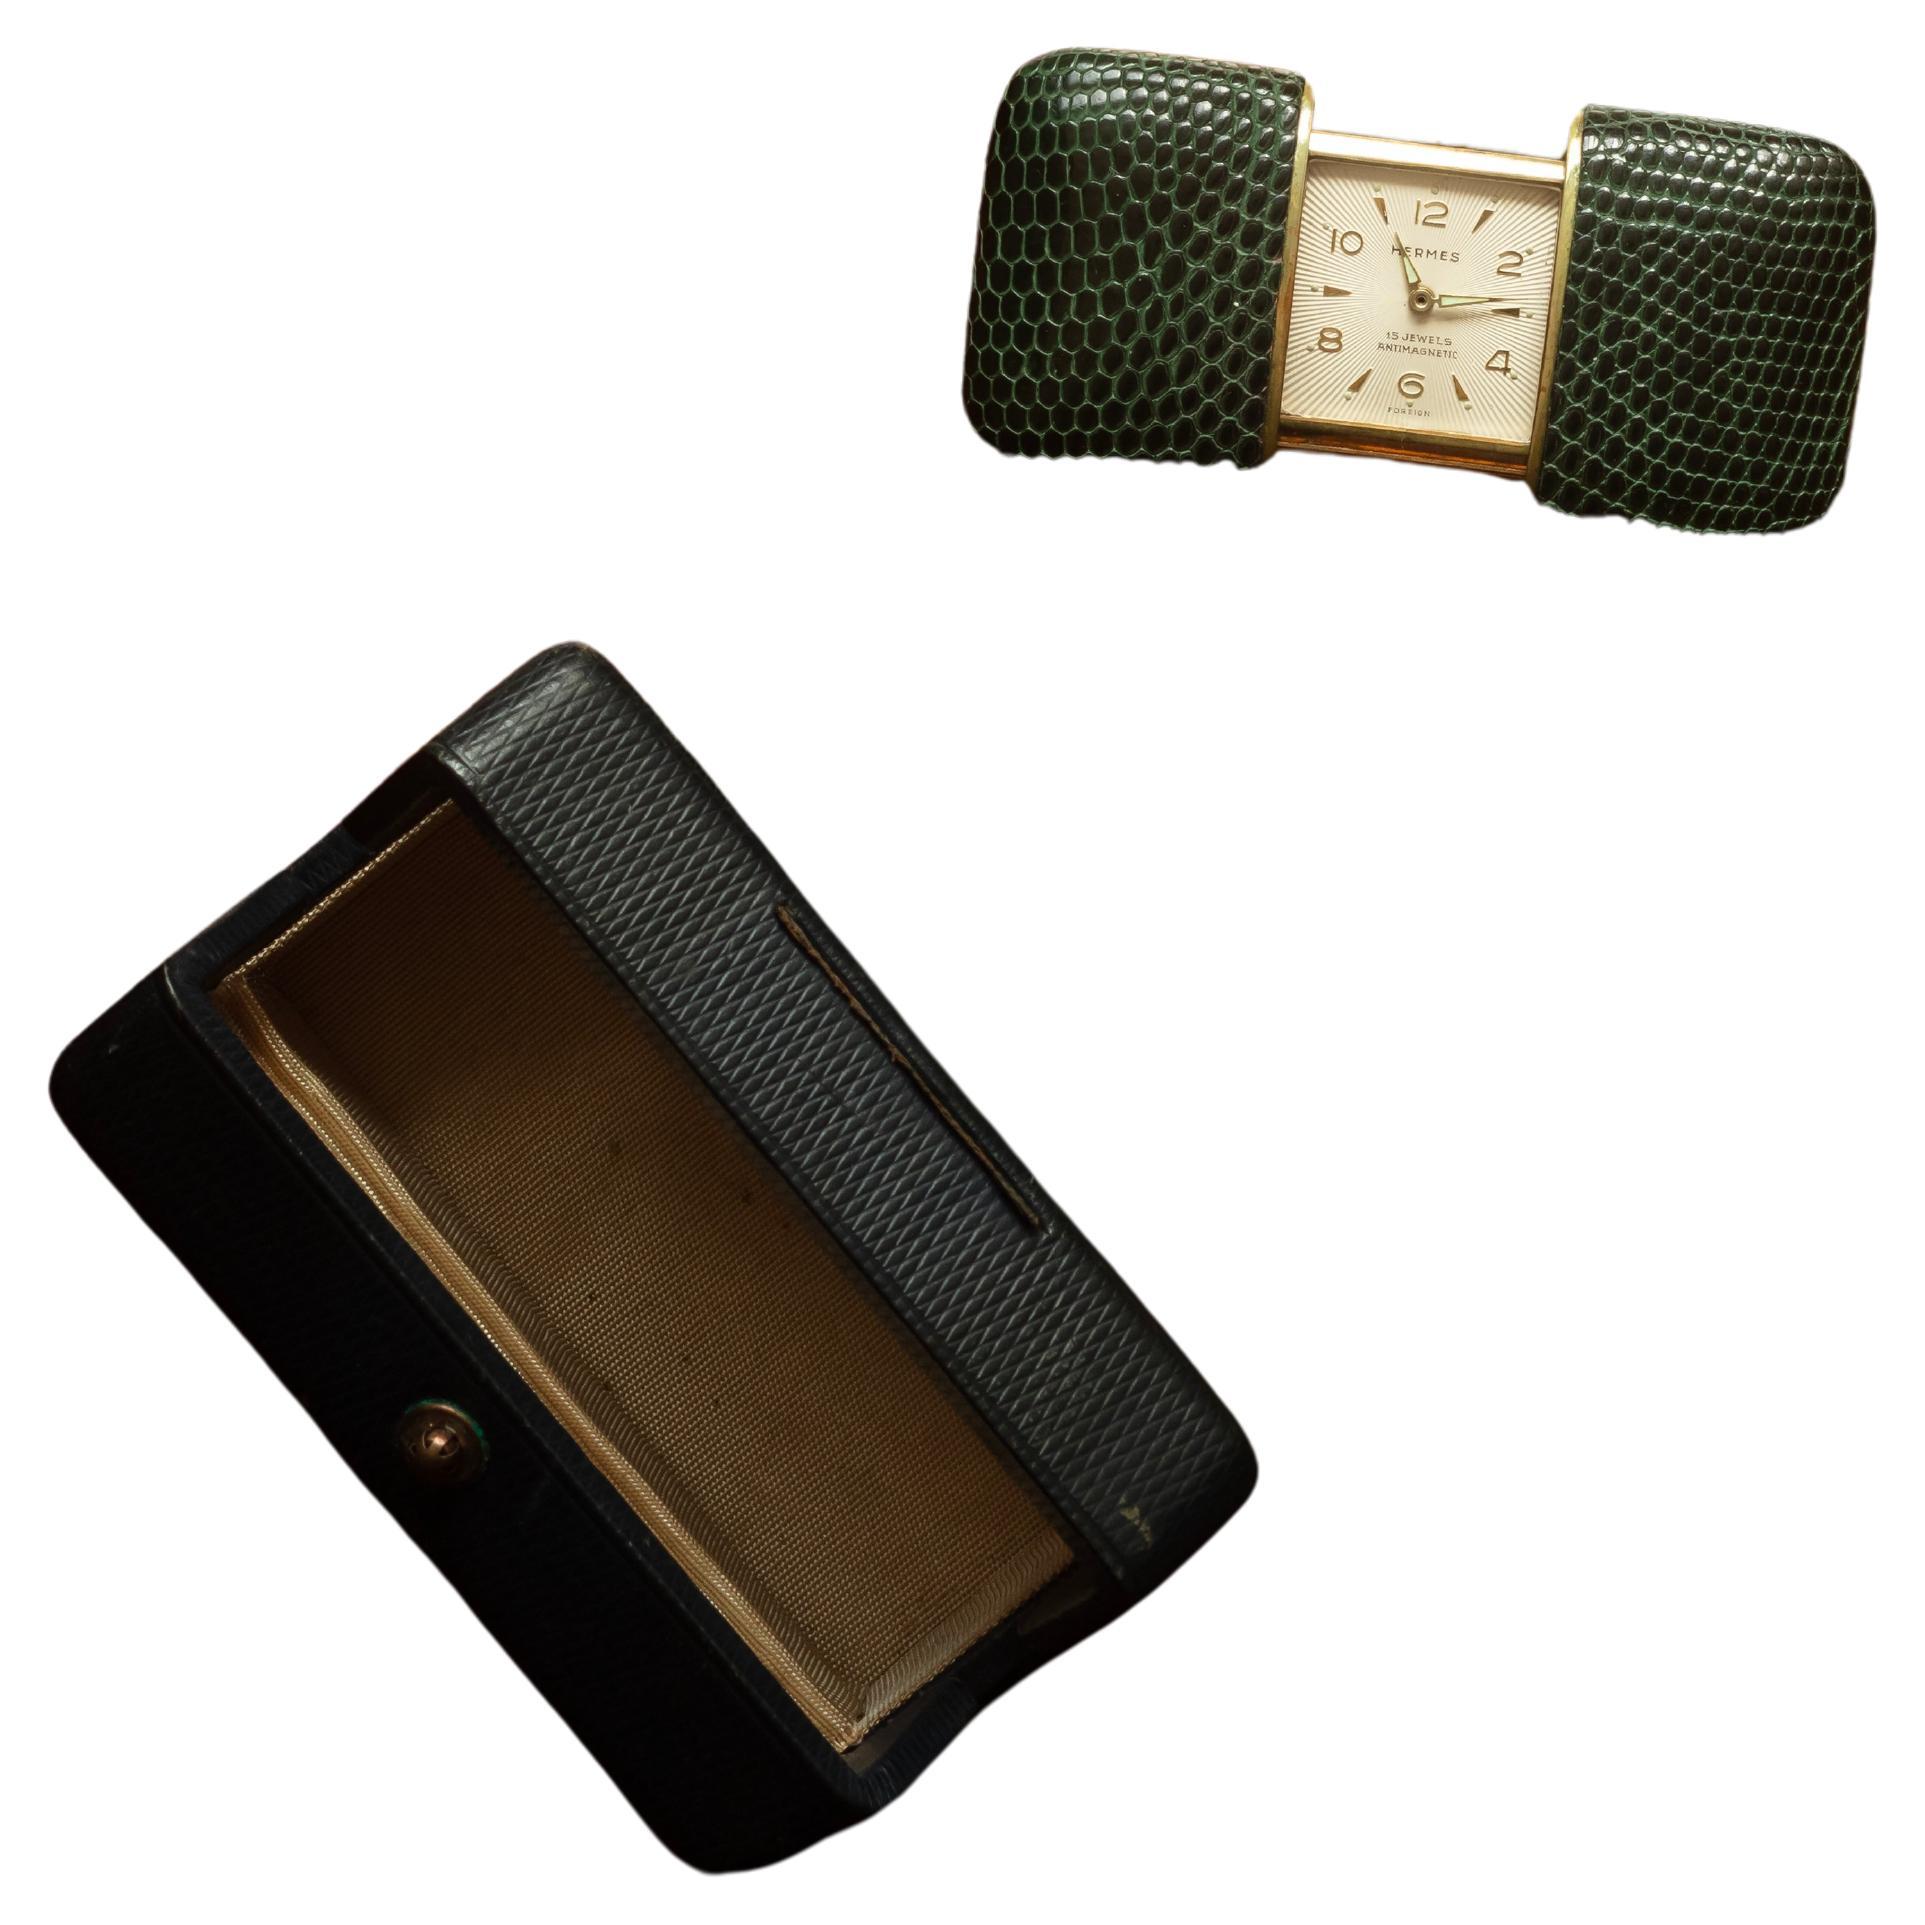 Hermes watch, 15 Jewels Antimagnetic, in green lizard leather case.